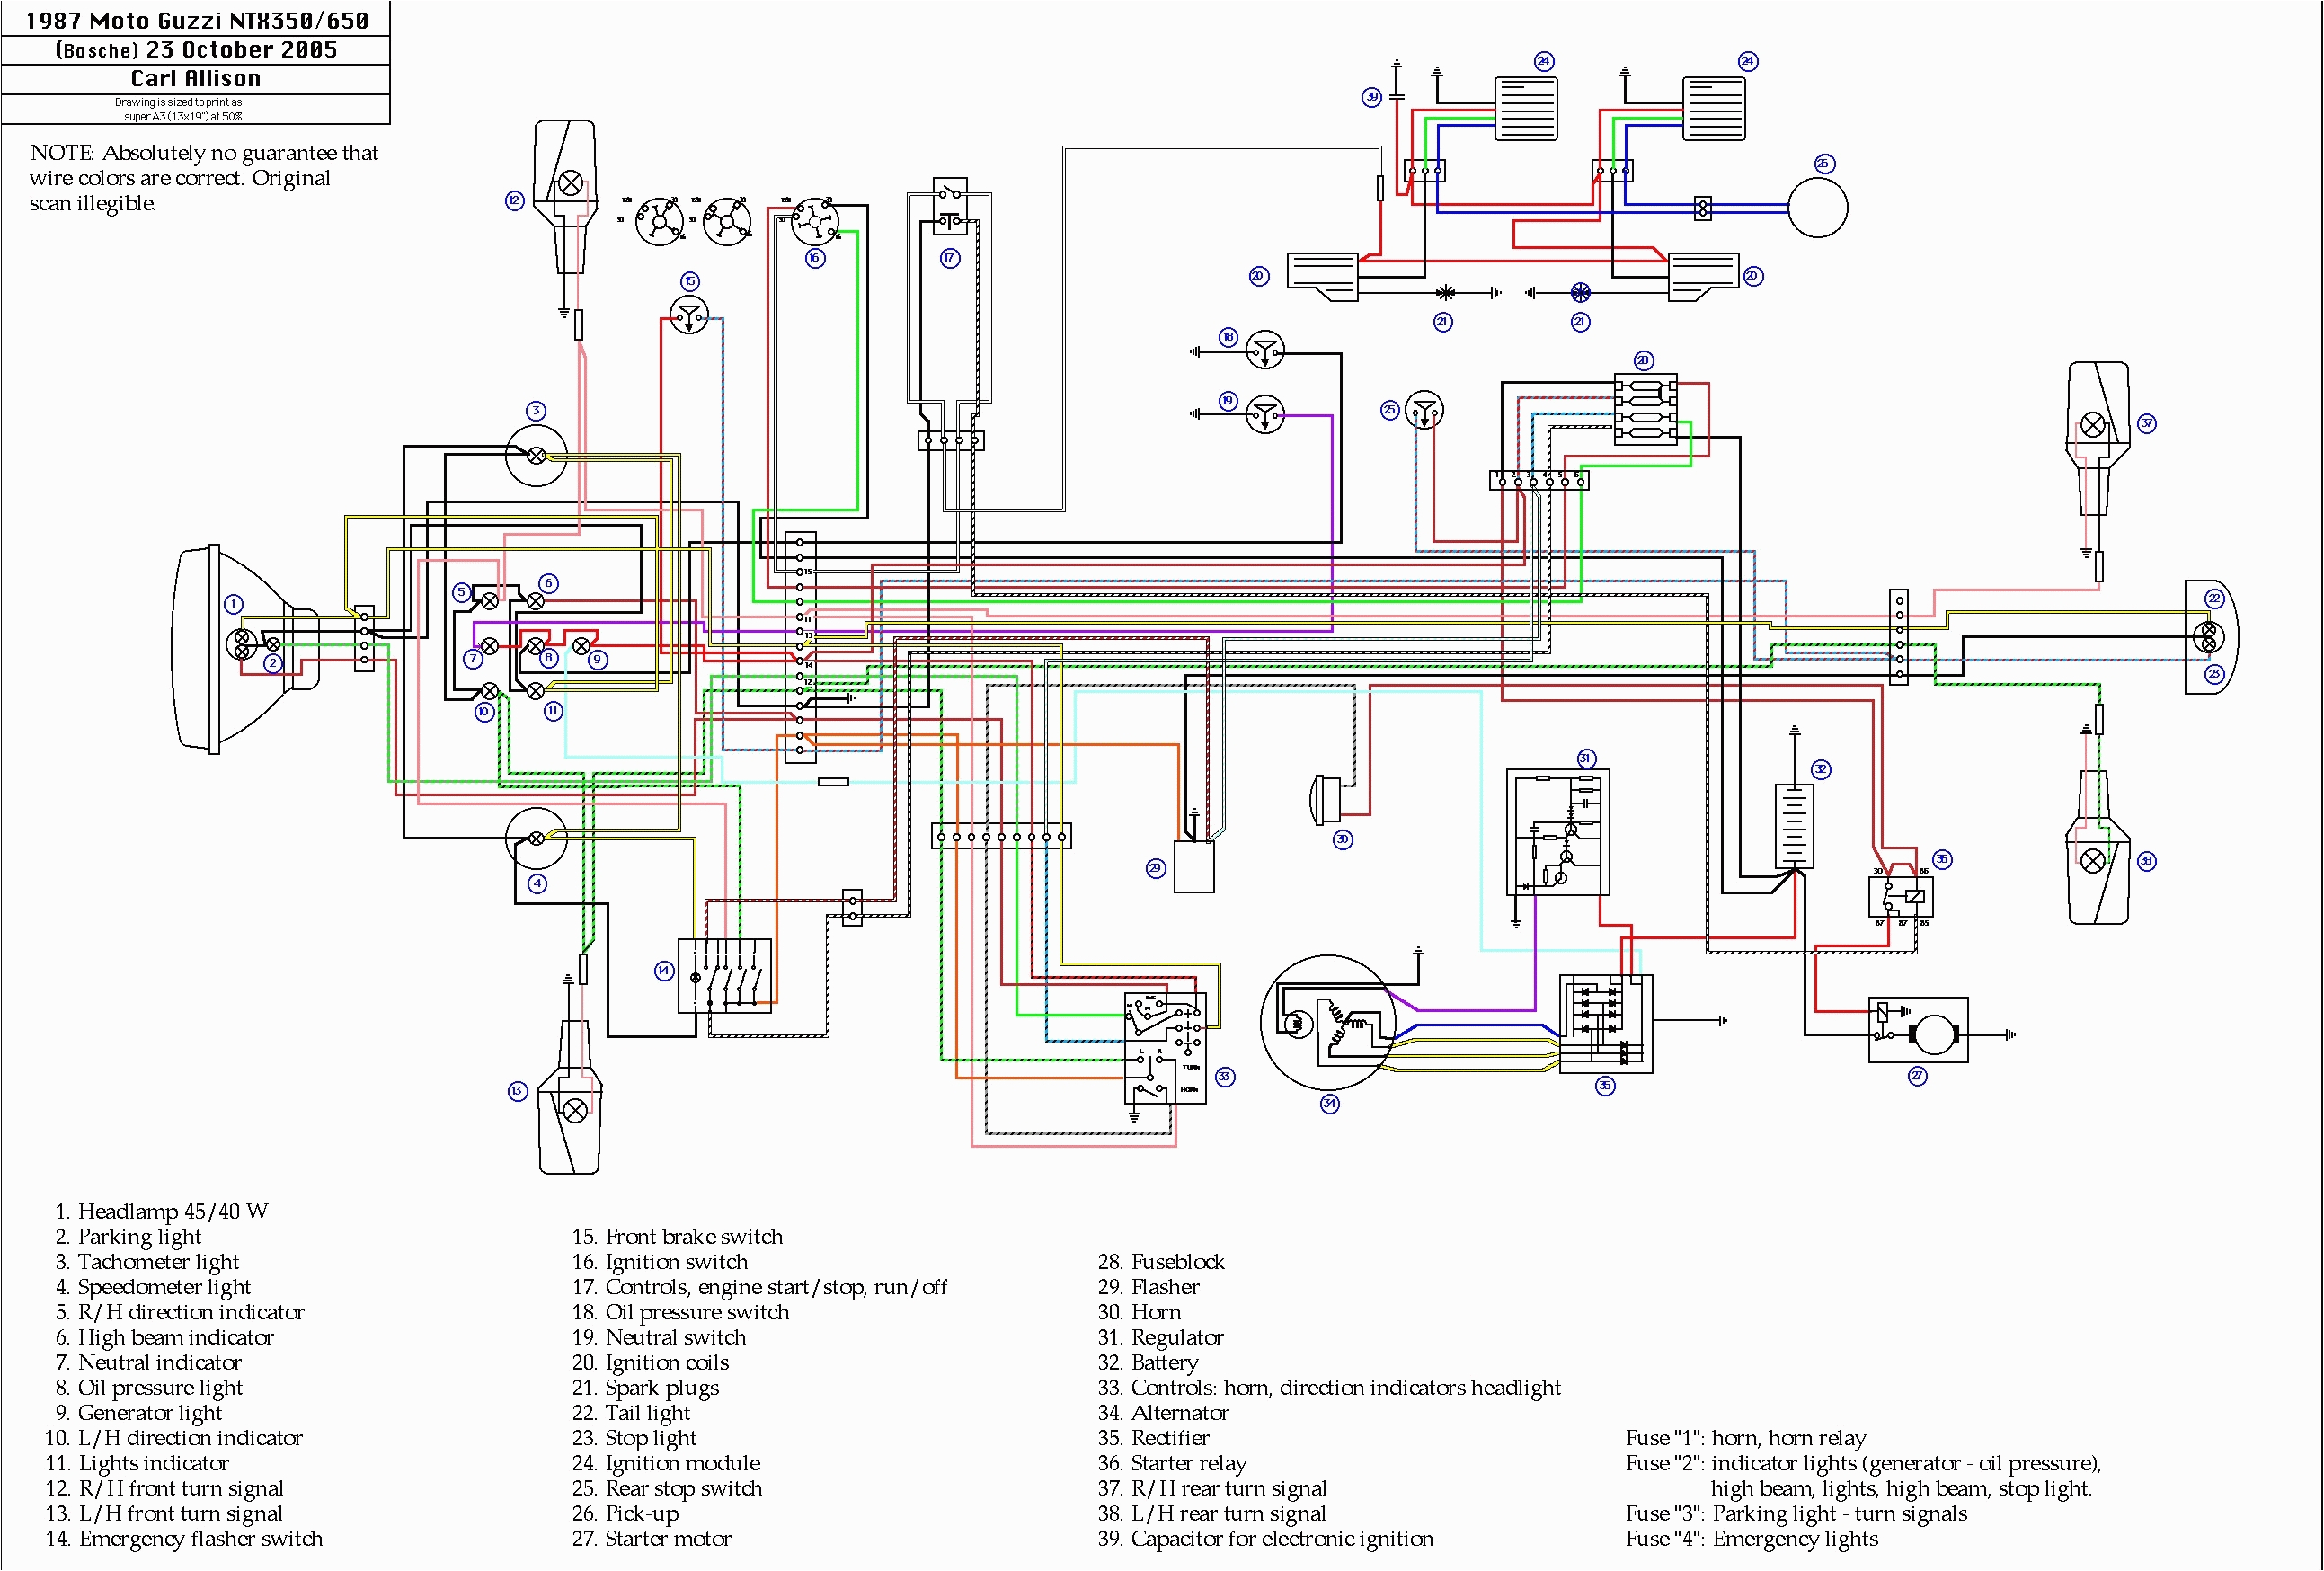 wiring diagram for tsl5 thermistor wiring diagram user wiring diagram for tsl5 thermistor